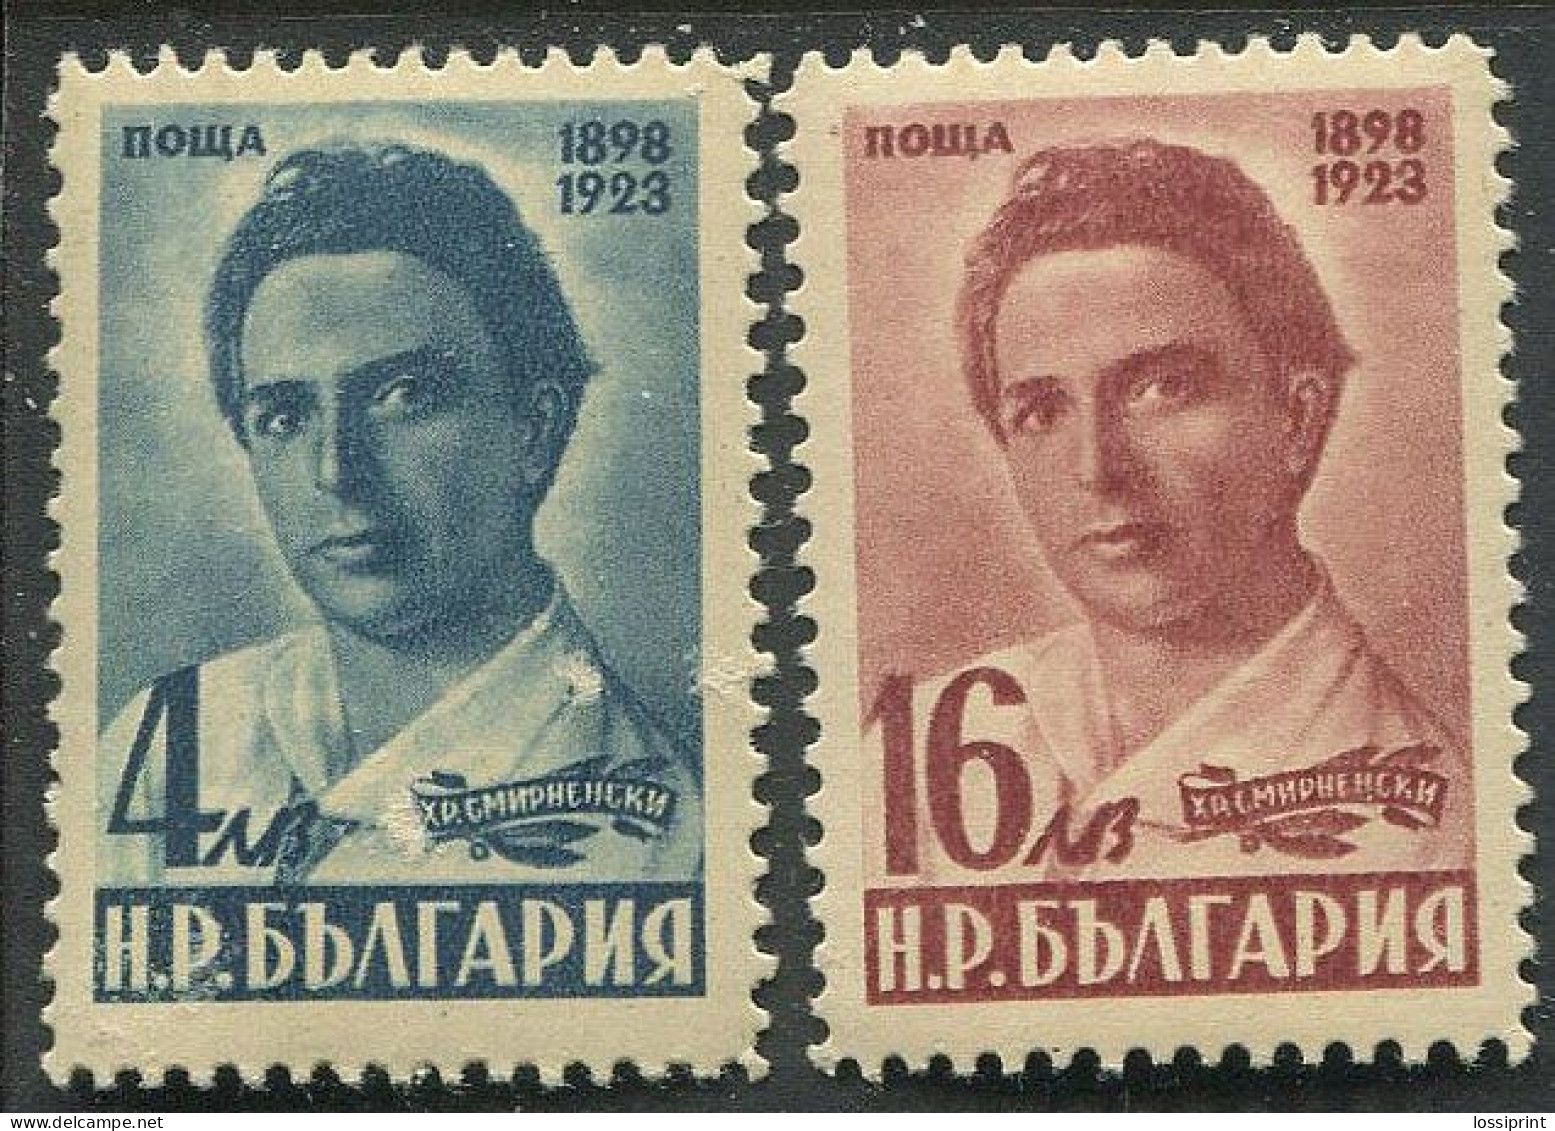 Bulgaria:Unused Stamps Serie H.R.Smirnenski, 1948, MNH - Ungebraucht